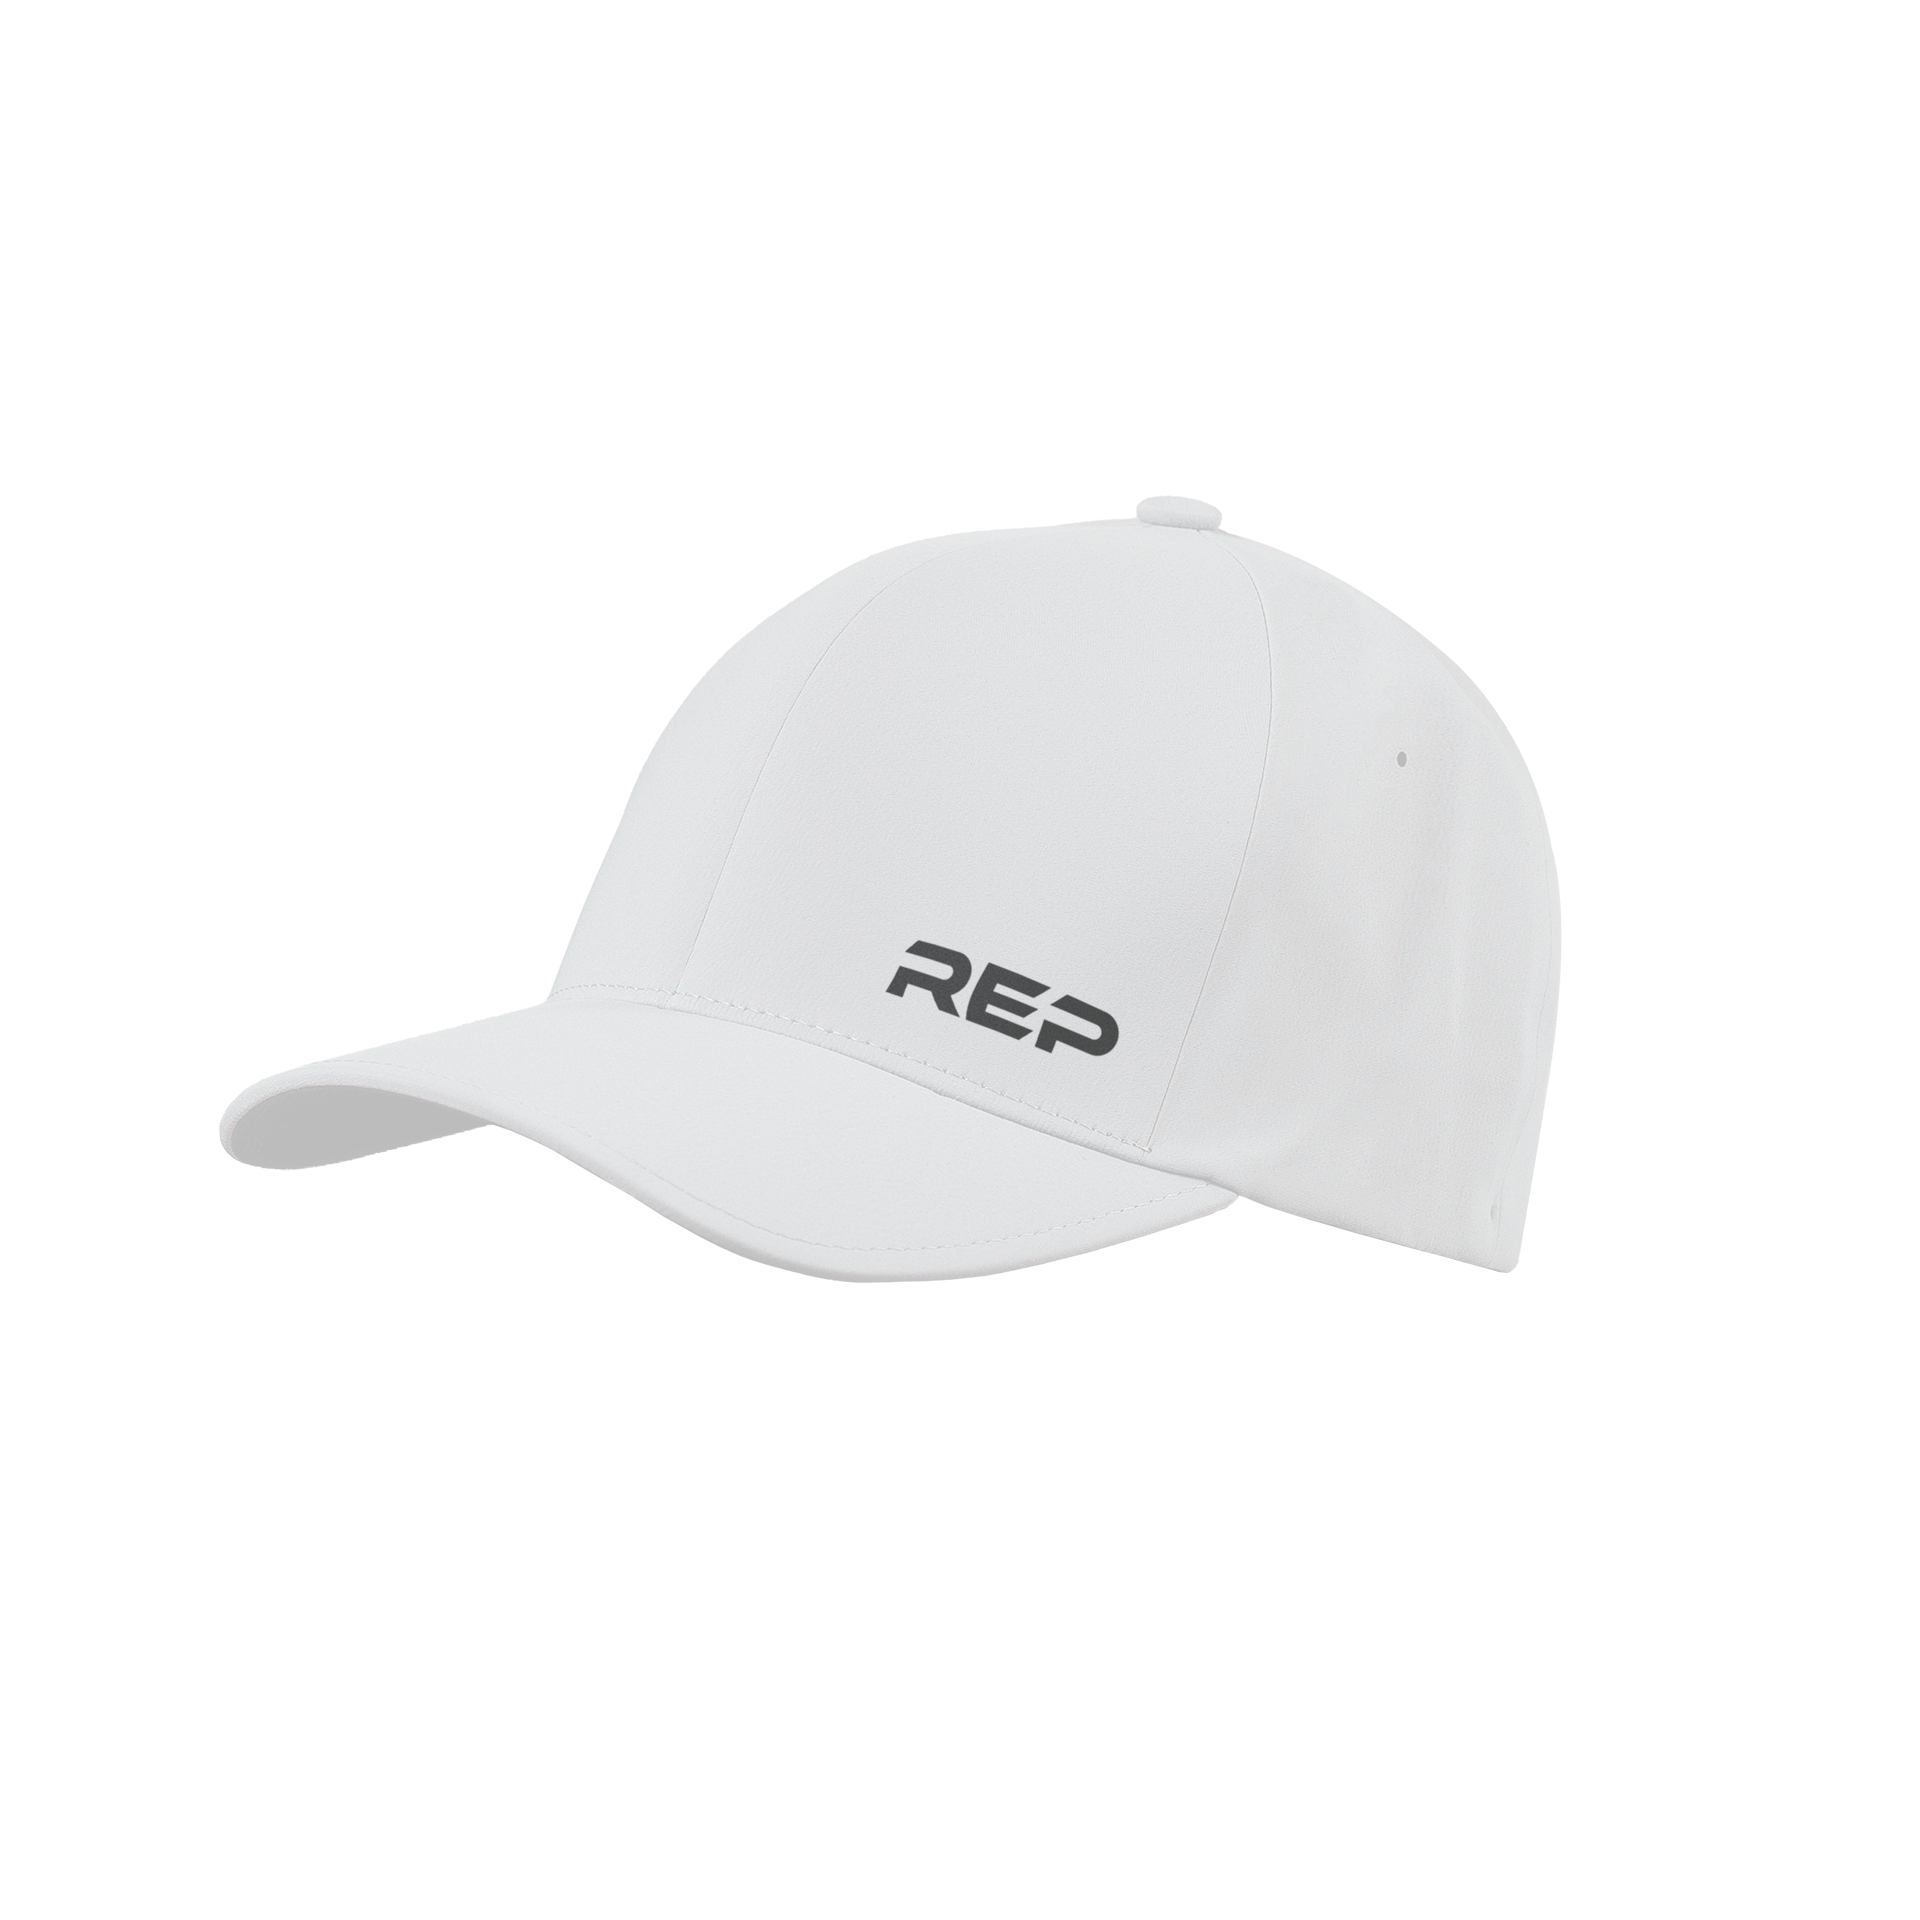 REP Performance Cap - White/Black / S/M (6 3/4